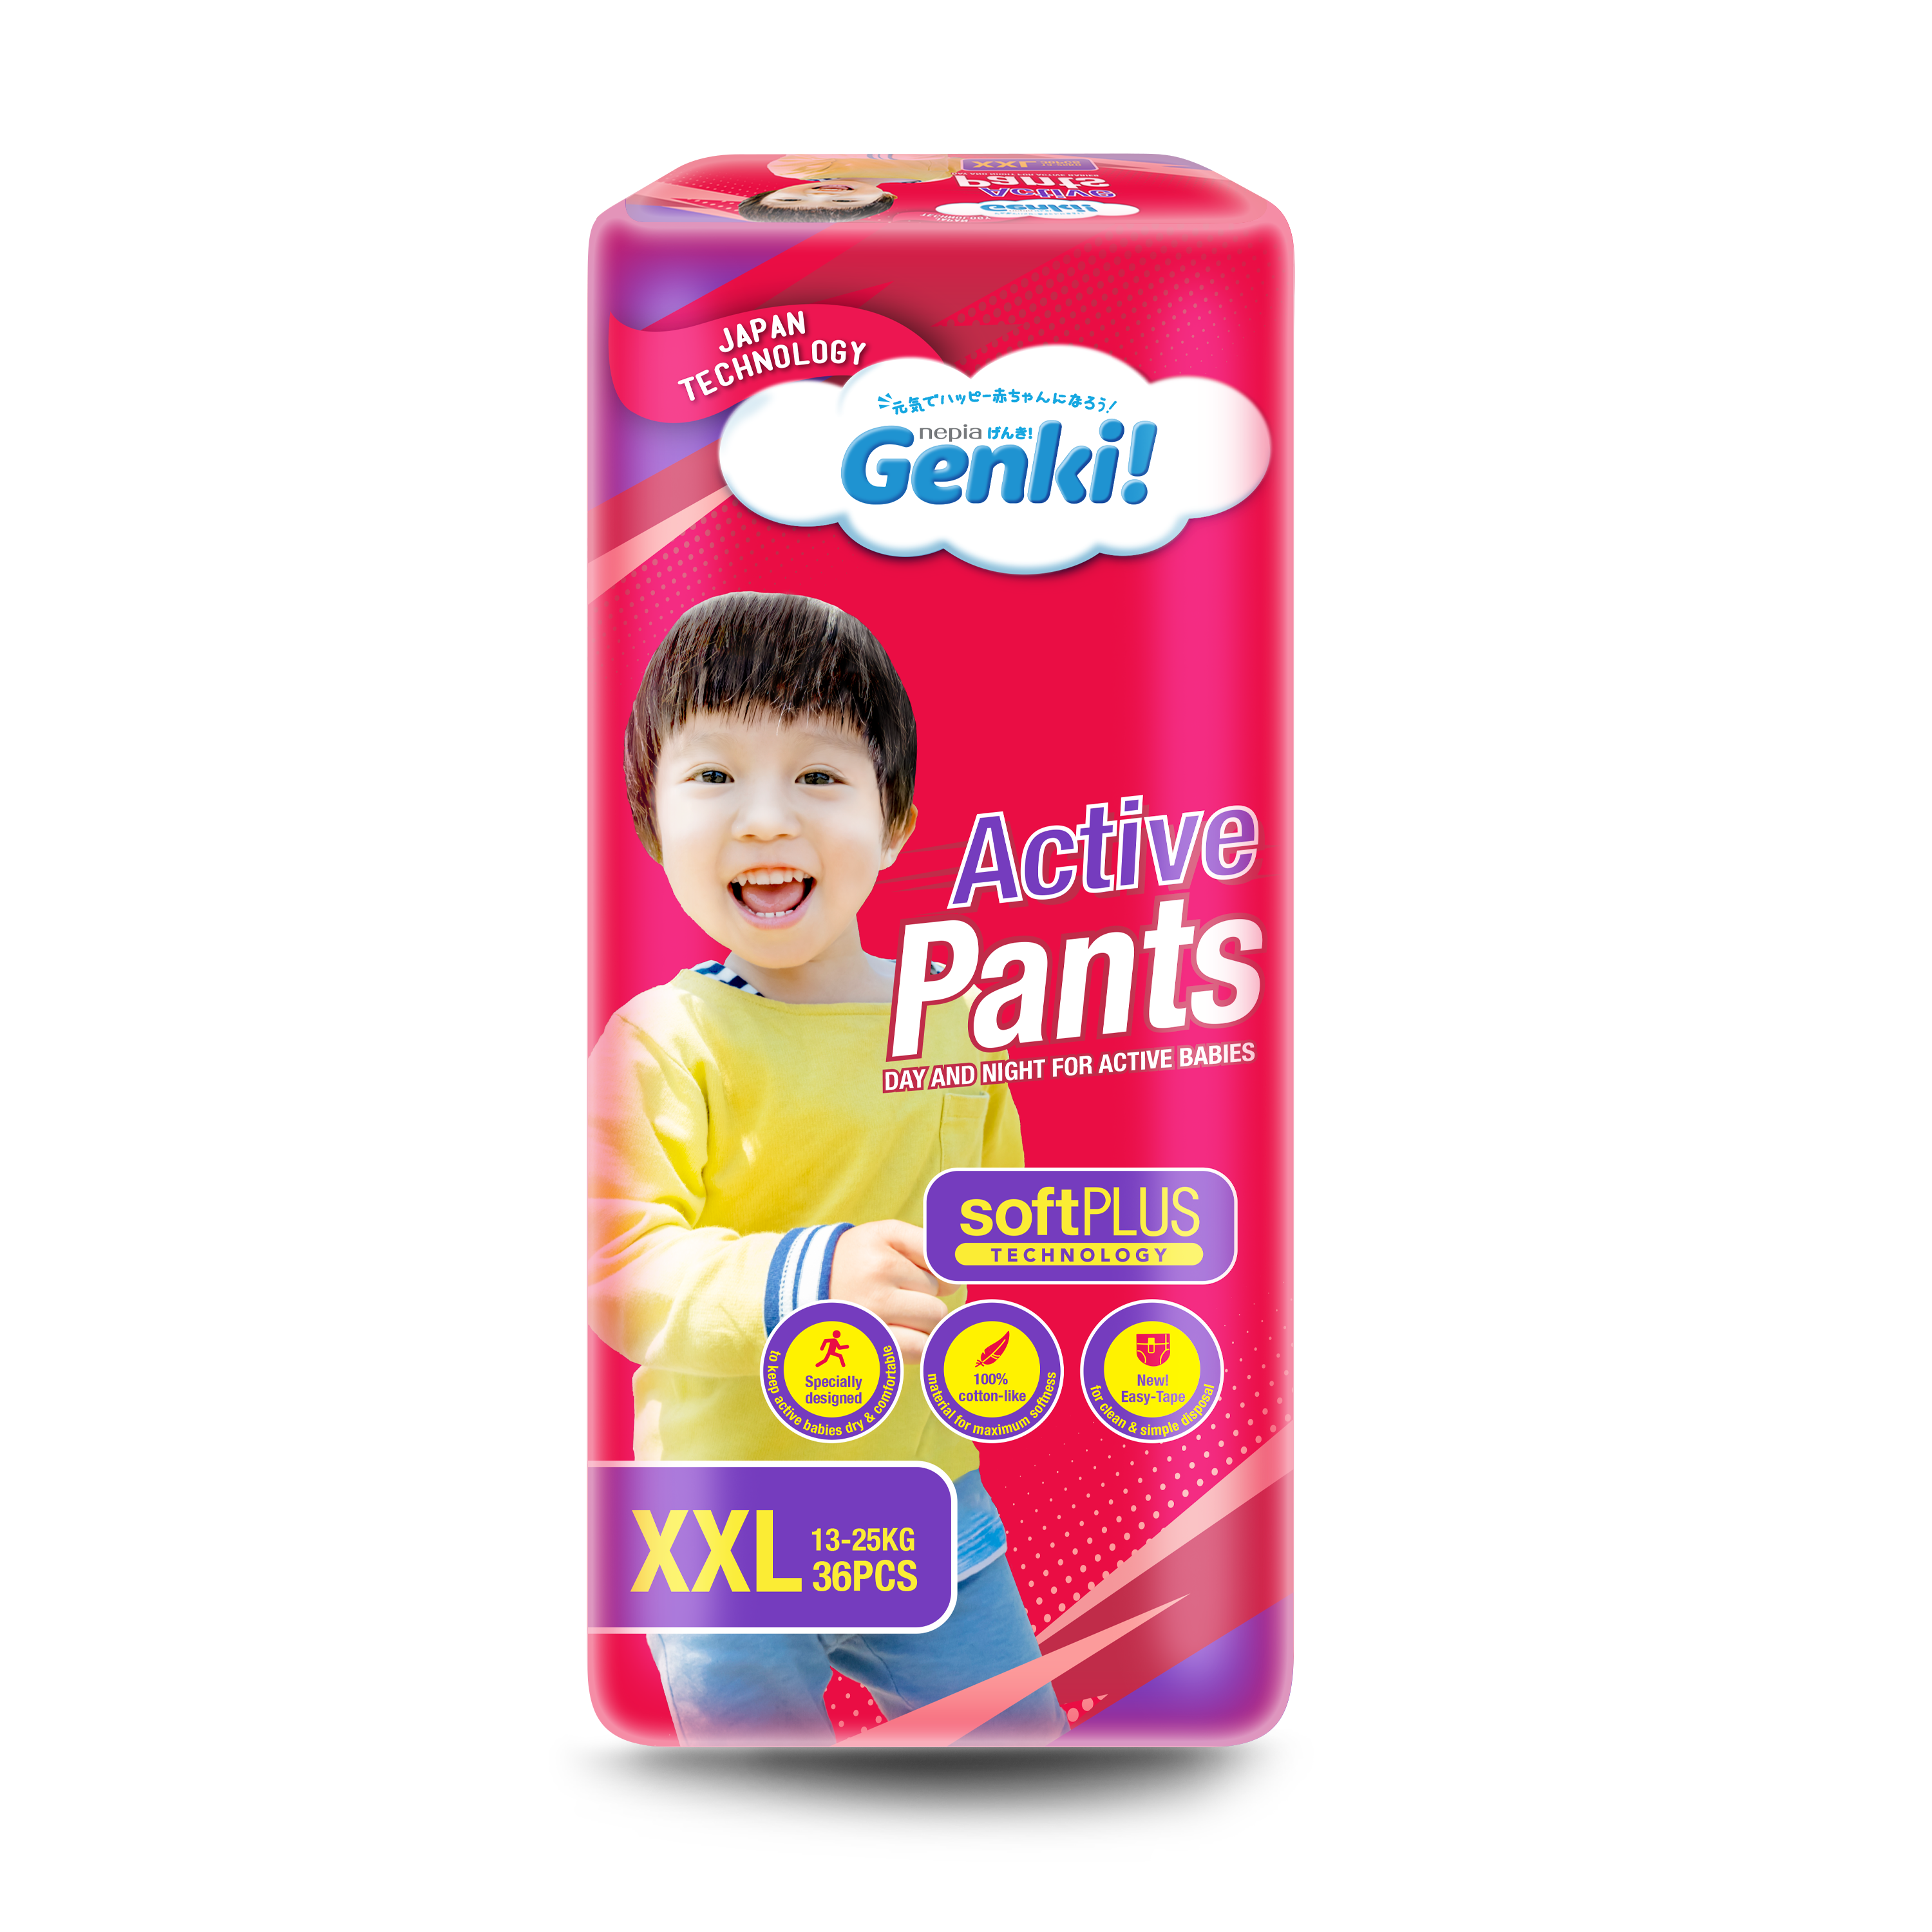 Lifree Extra Absorb Adult Daiper Pants - XL